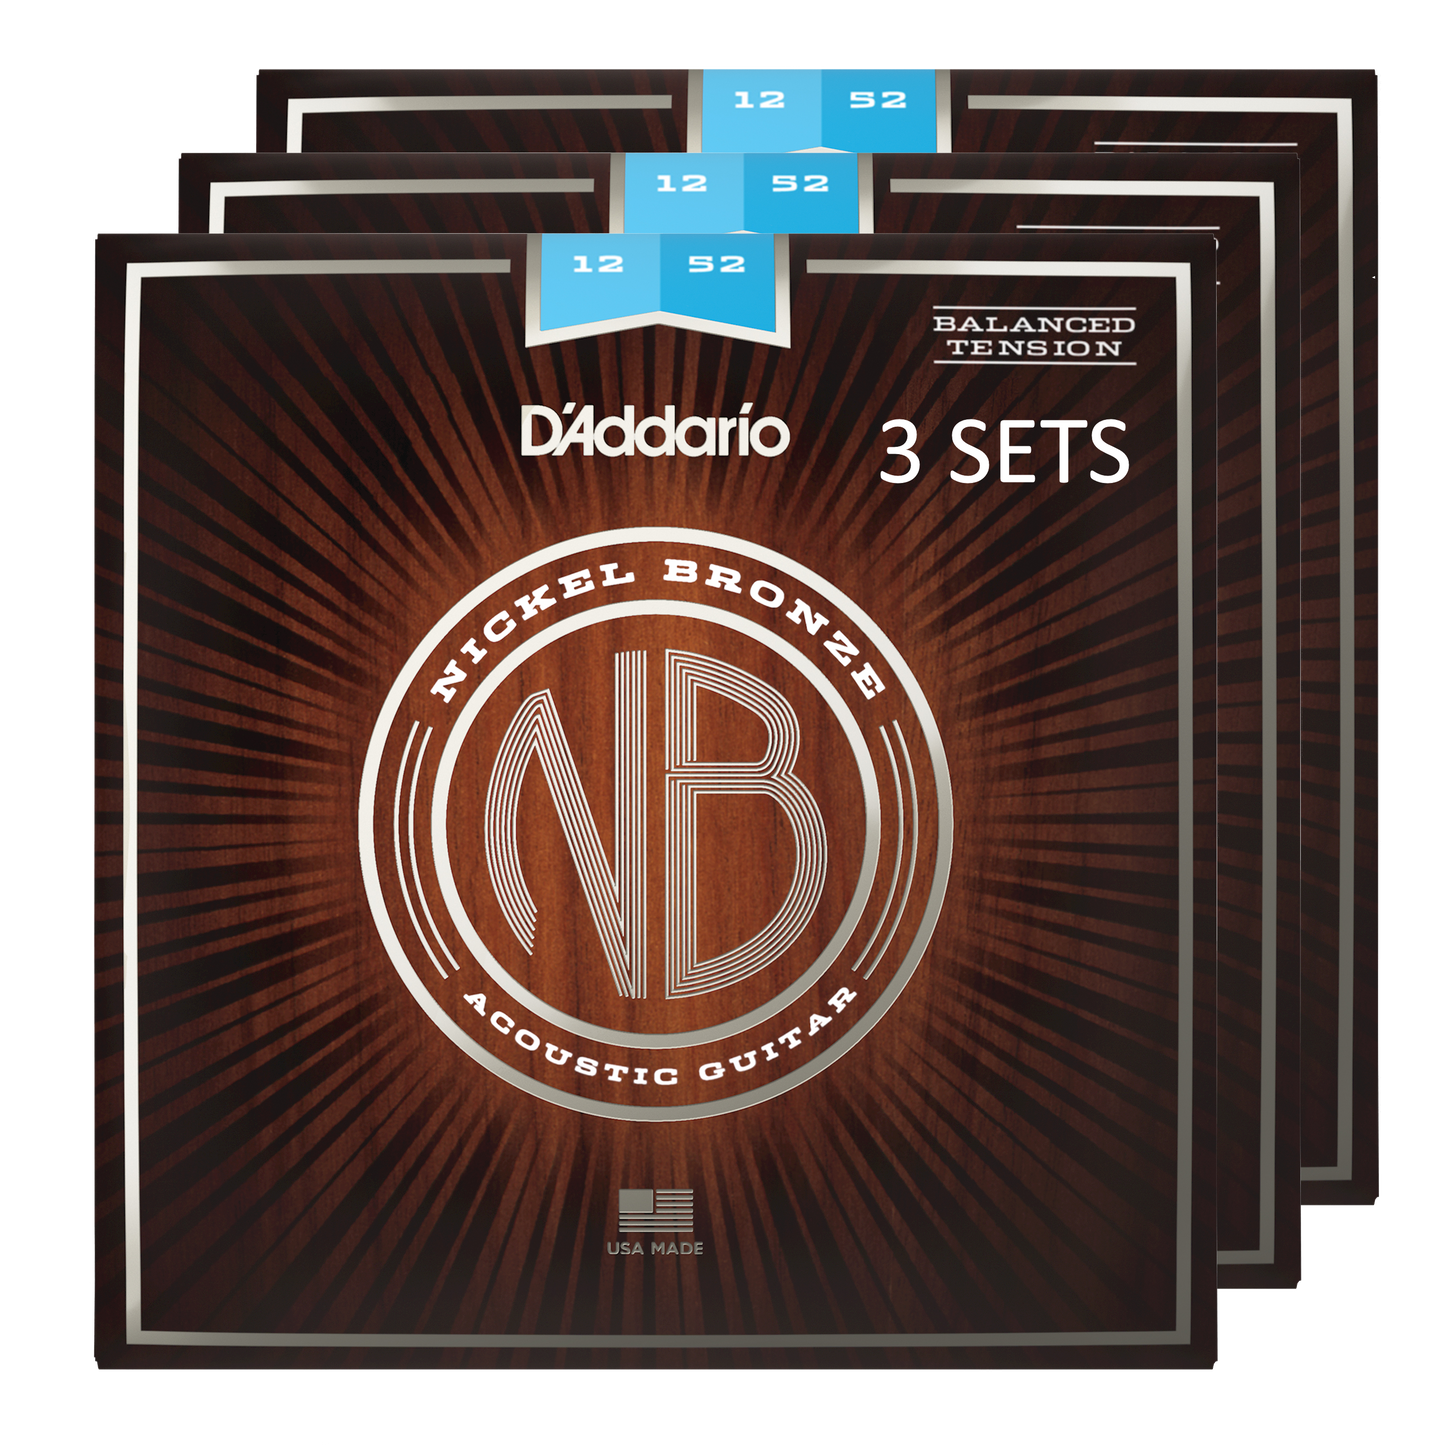 D'Addario NB1252BT-3P Nickel Bronze Acoustic Guitar Strings, Balanced Tension Light (3 SETS)